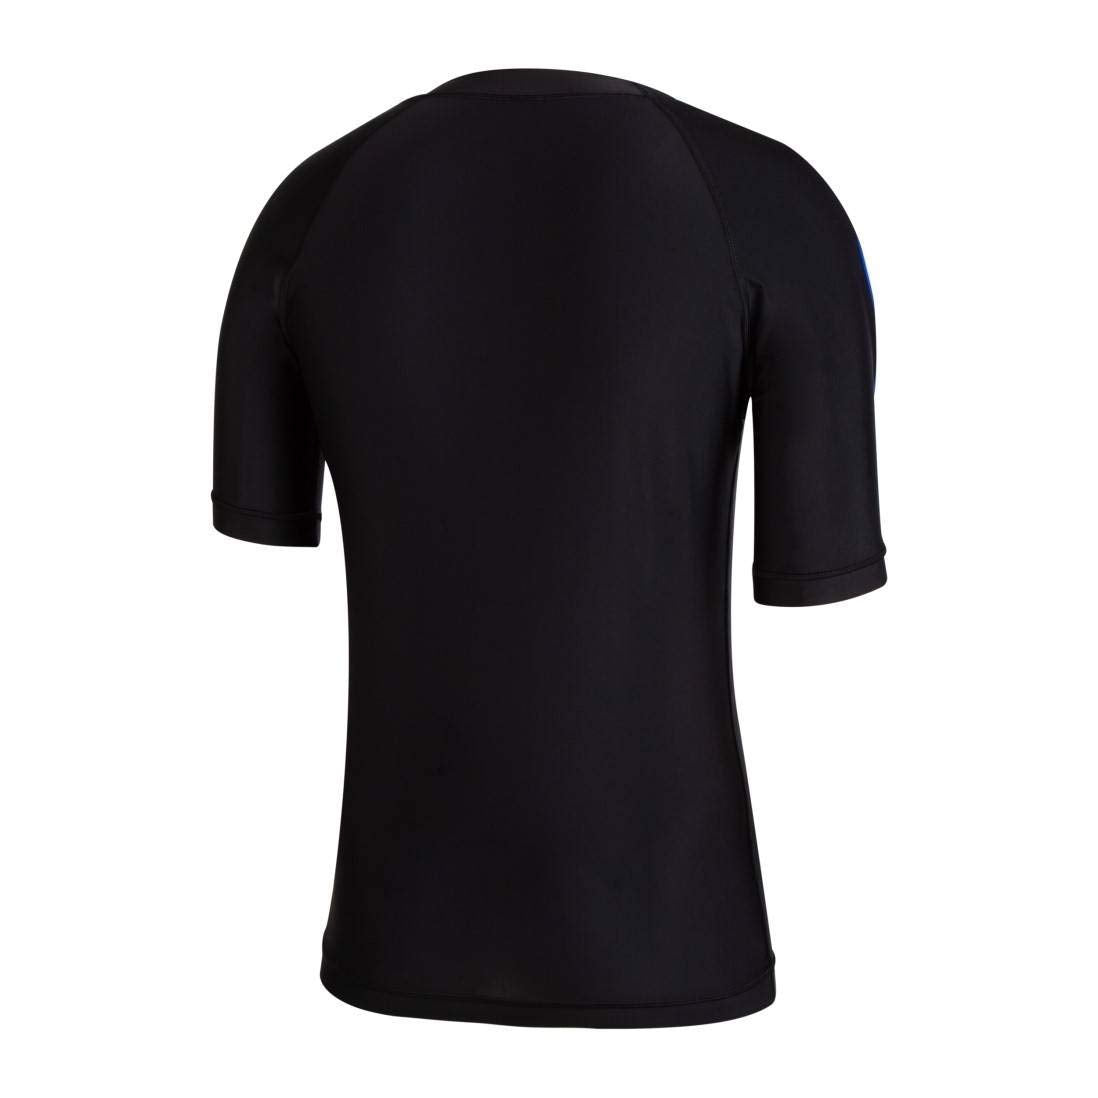 Speedo Swimwear Men T-Shirt - Best Price online Prokicksports.com